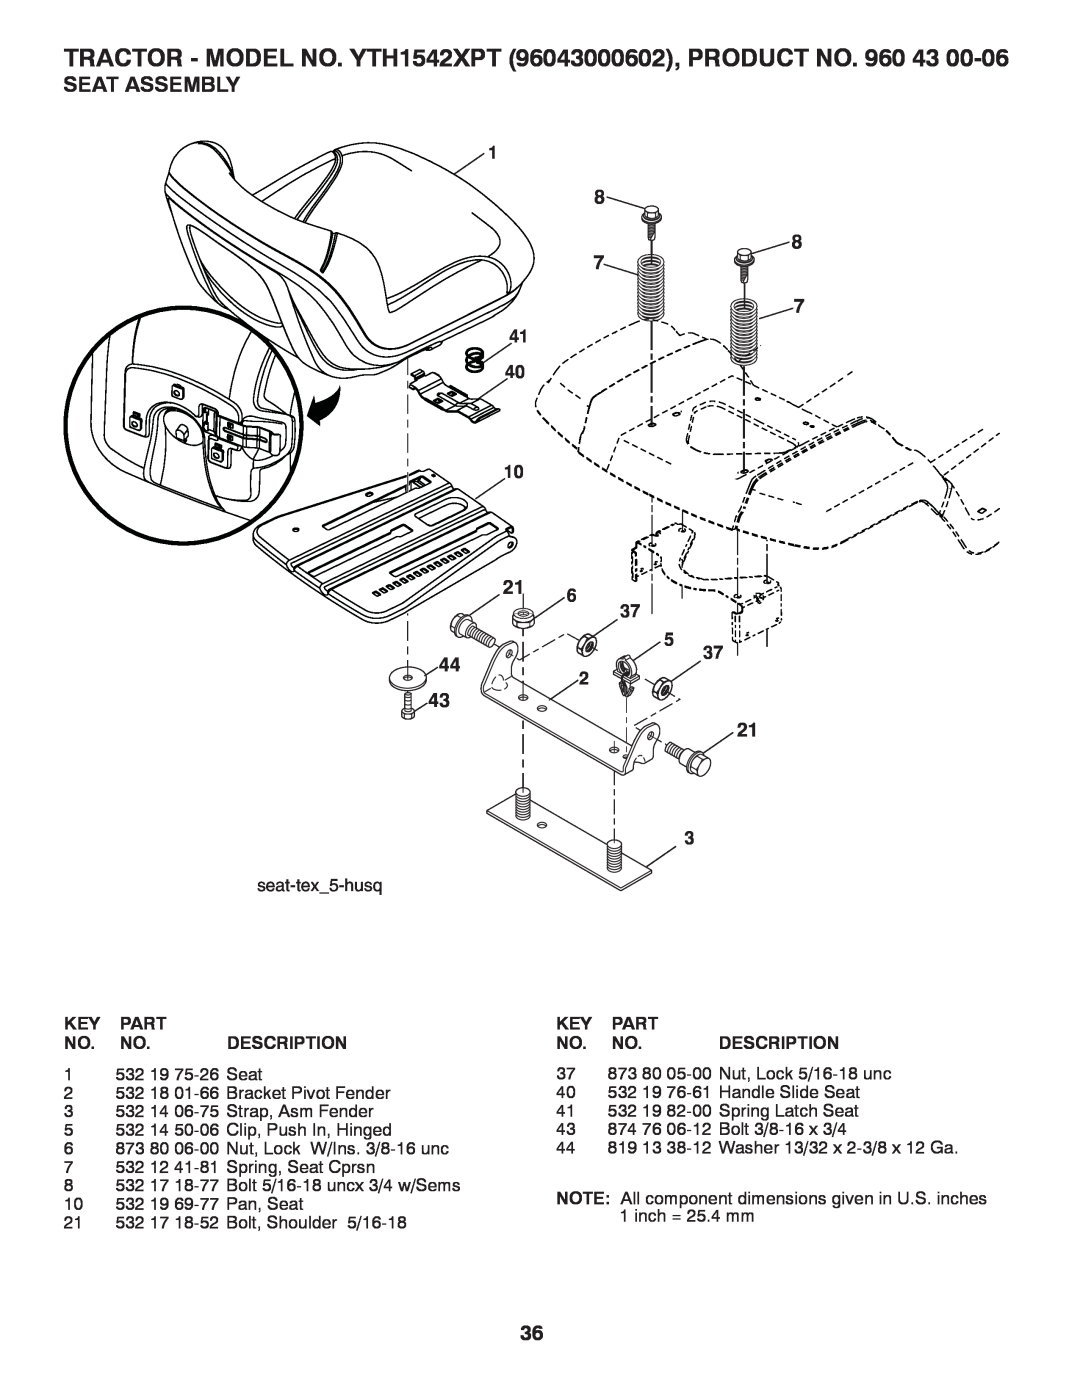 Husqvarna Seat Assembly, TRACTOR - MODEL NO. YTH1542XPT 96043000602, PRODUCT NO. 960 43, Key Part No. No. Description 